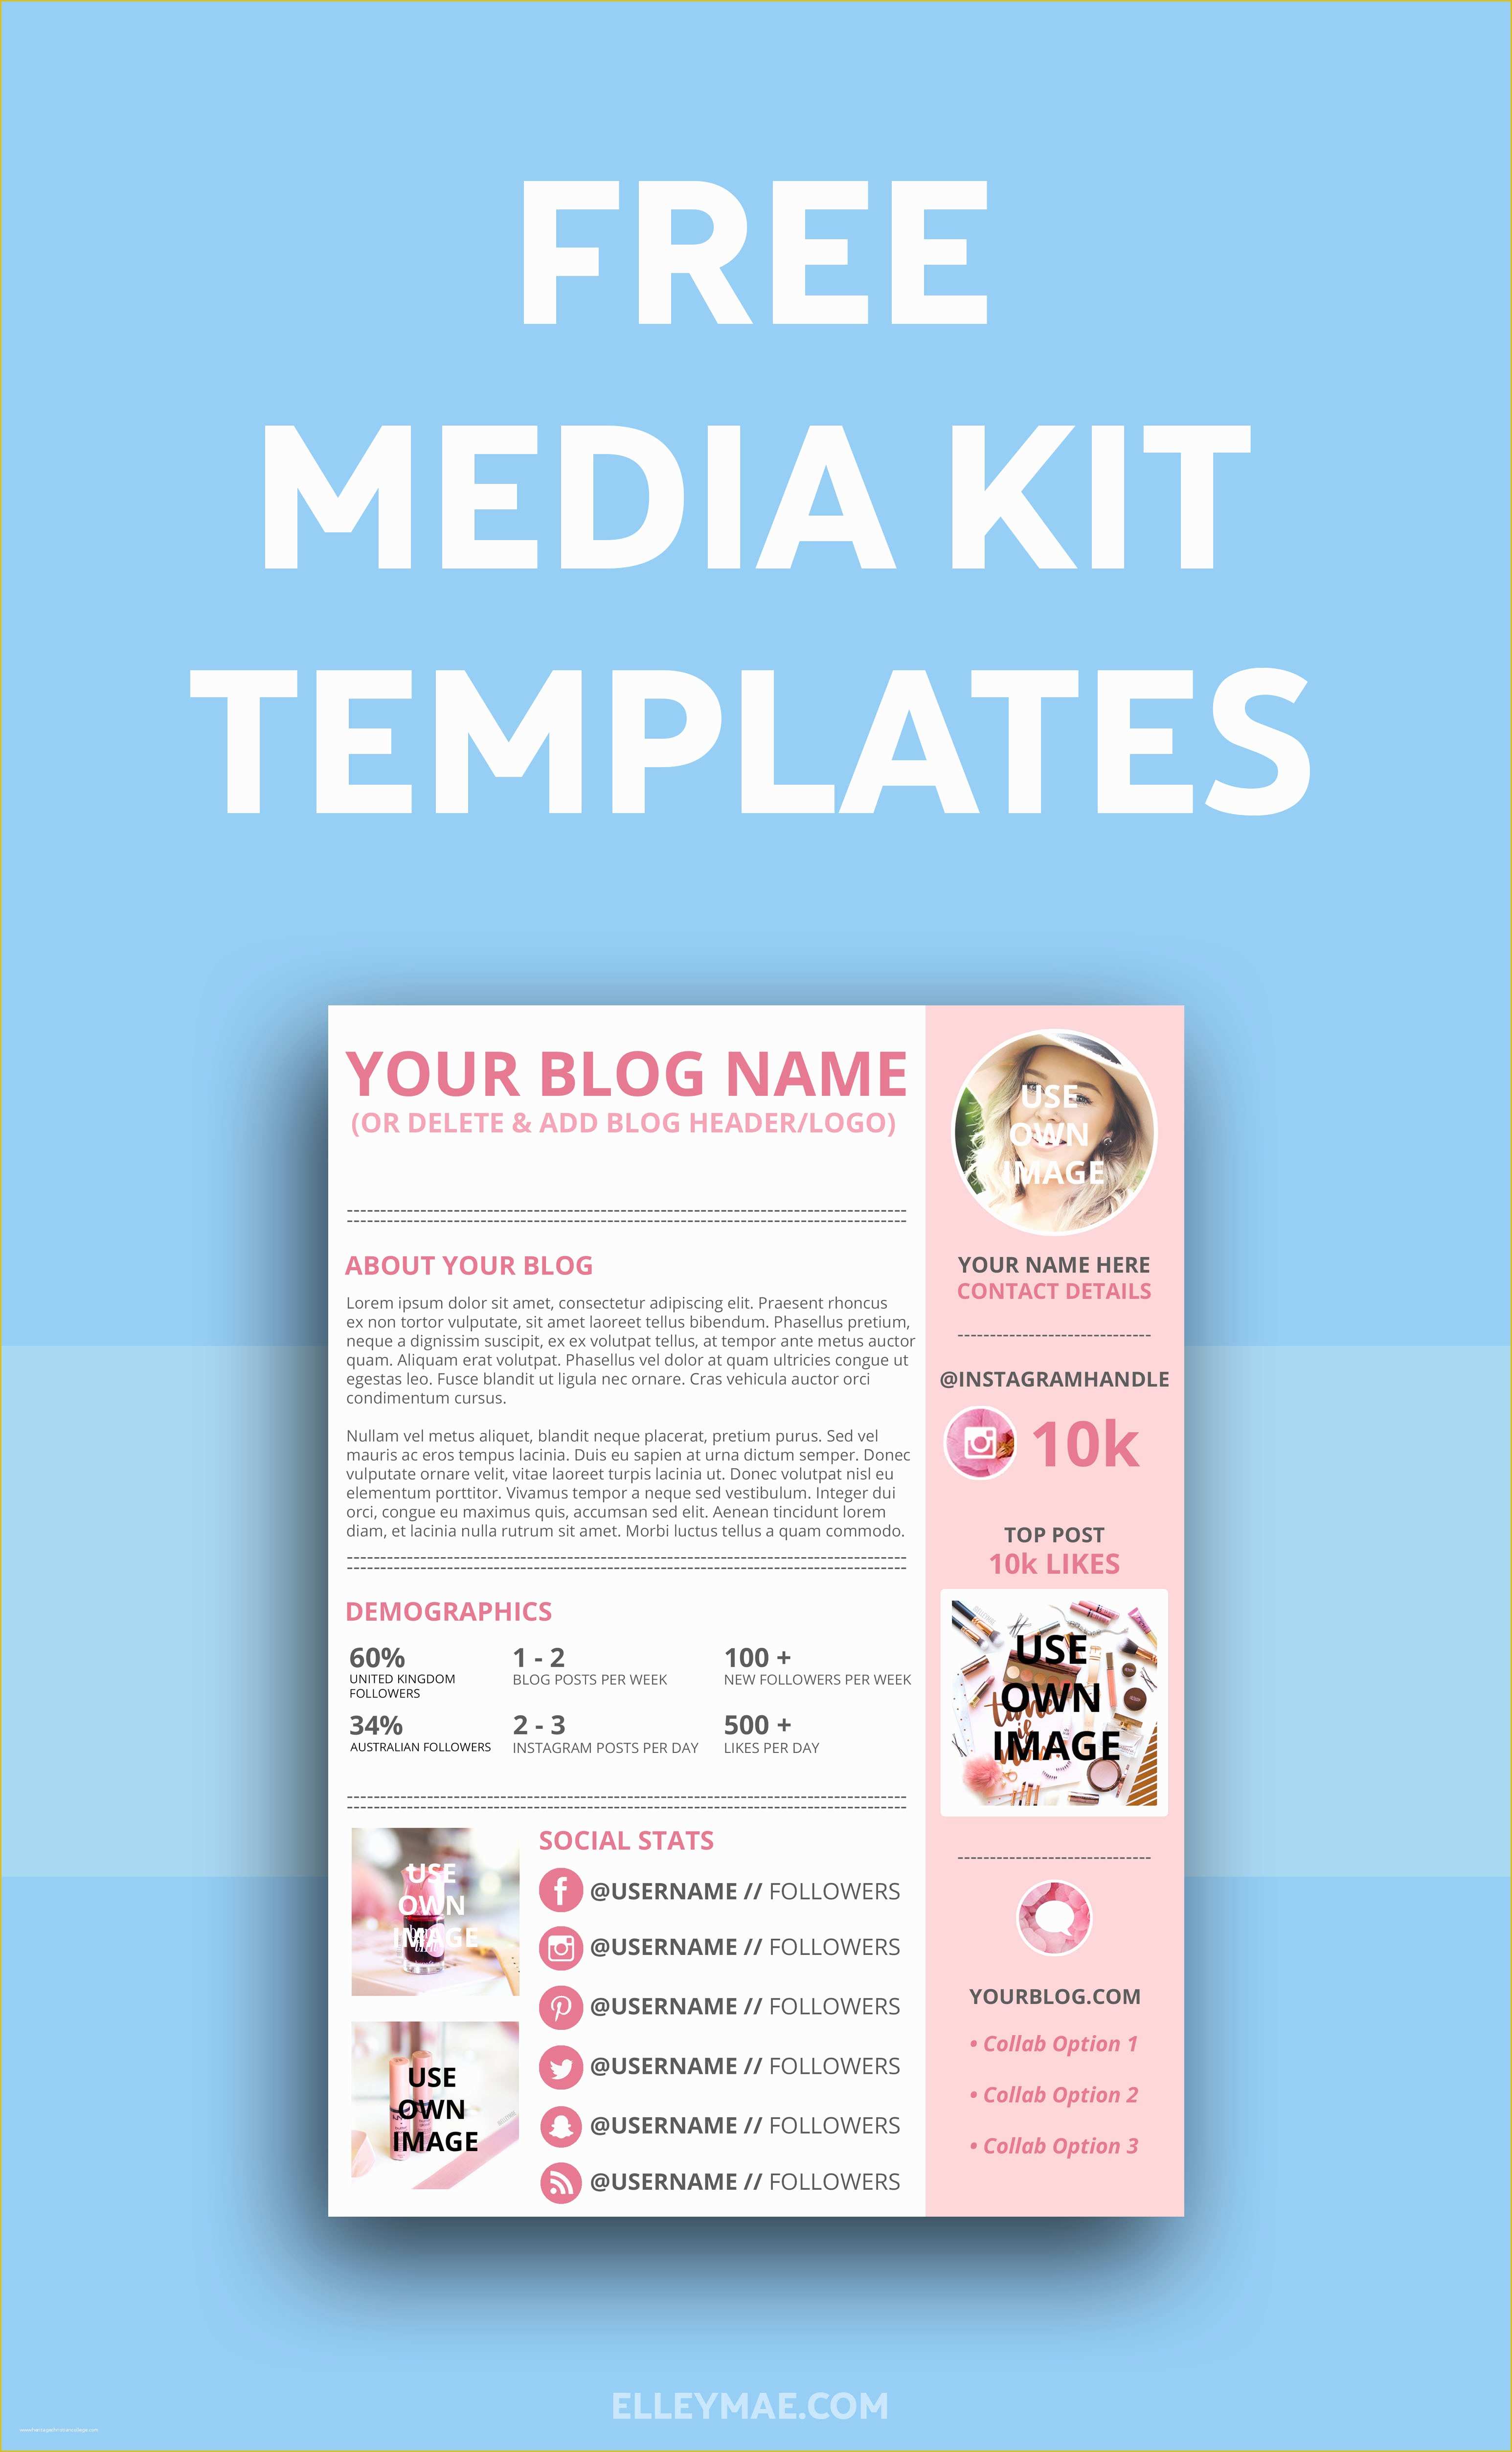 Free Press Kit Template Of How to Create A Kick ass Media Kit